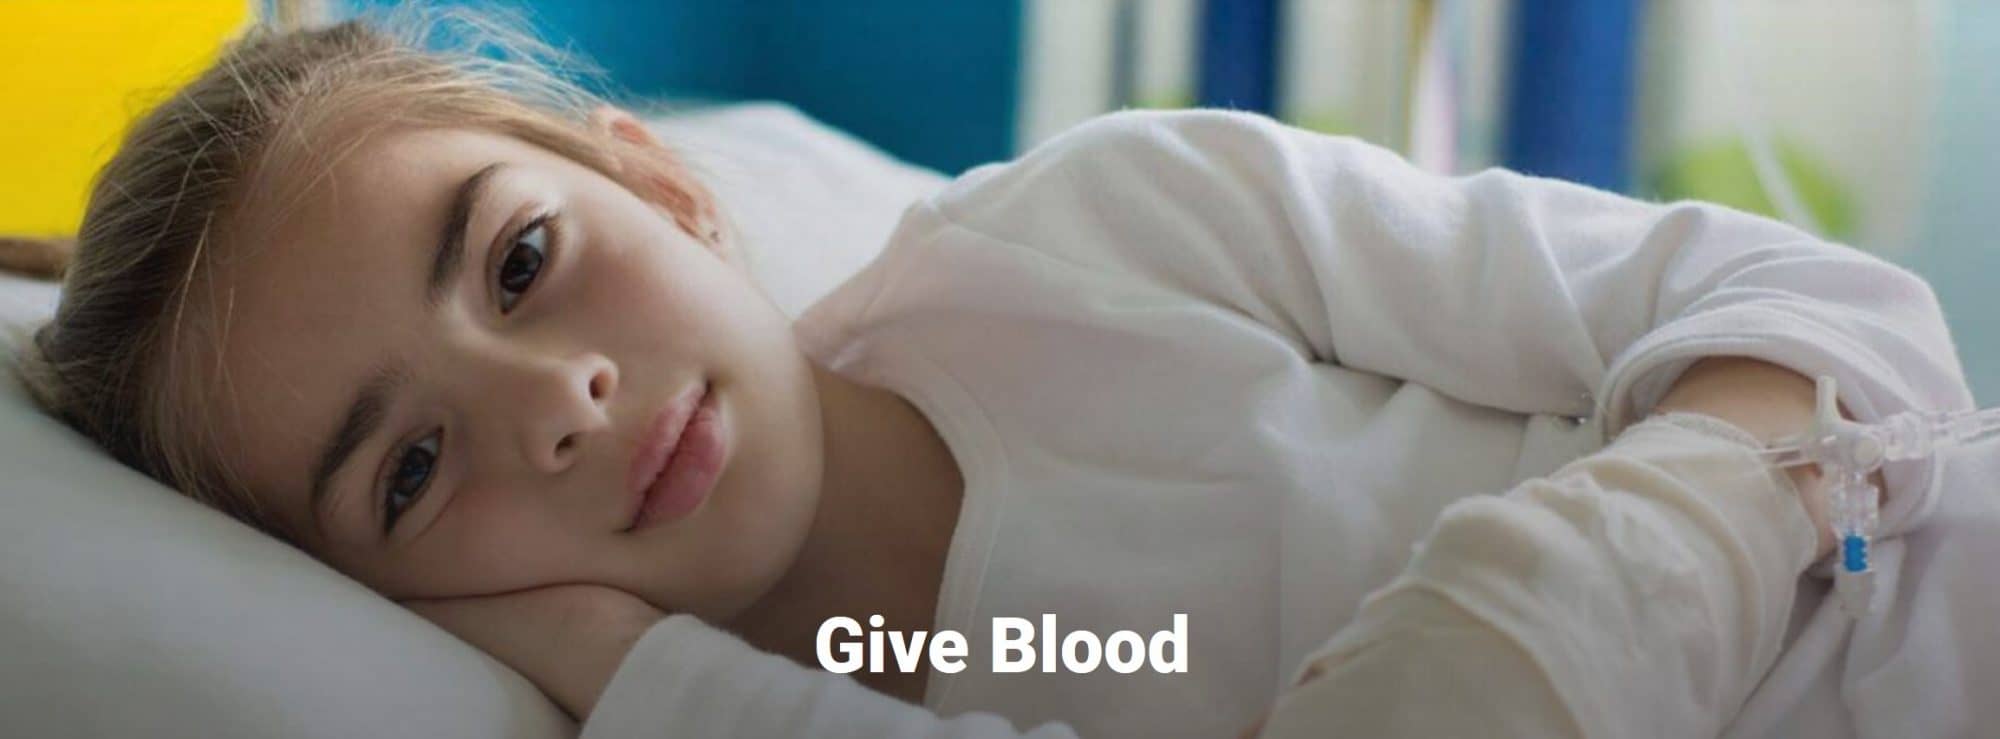 Girl giving blood